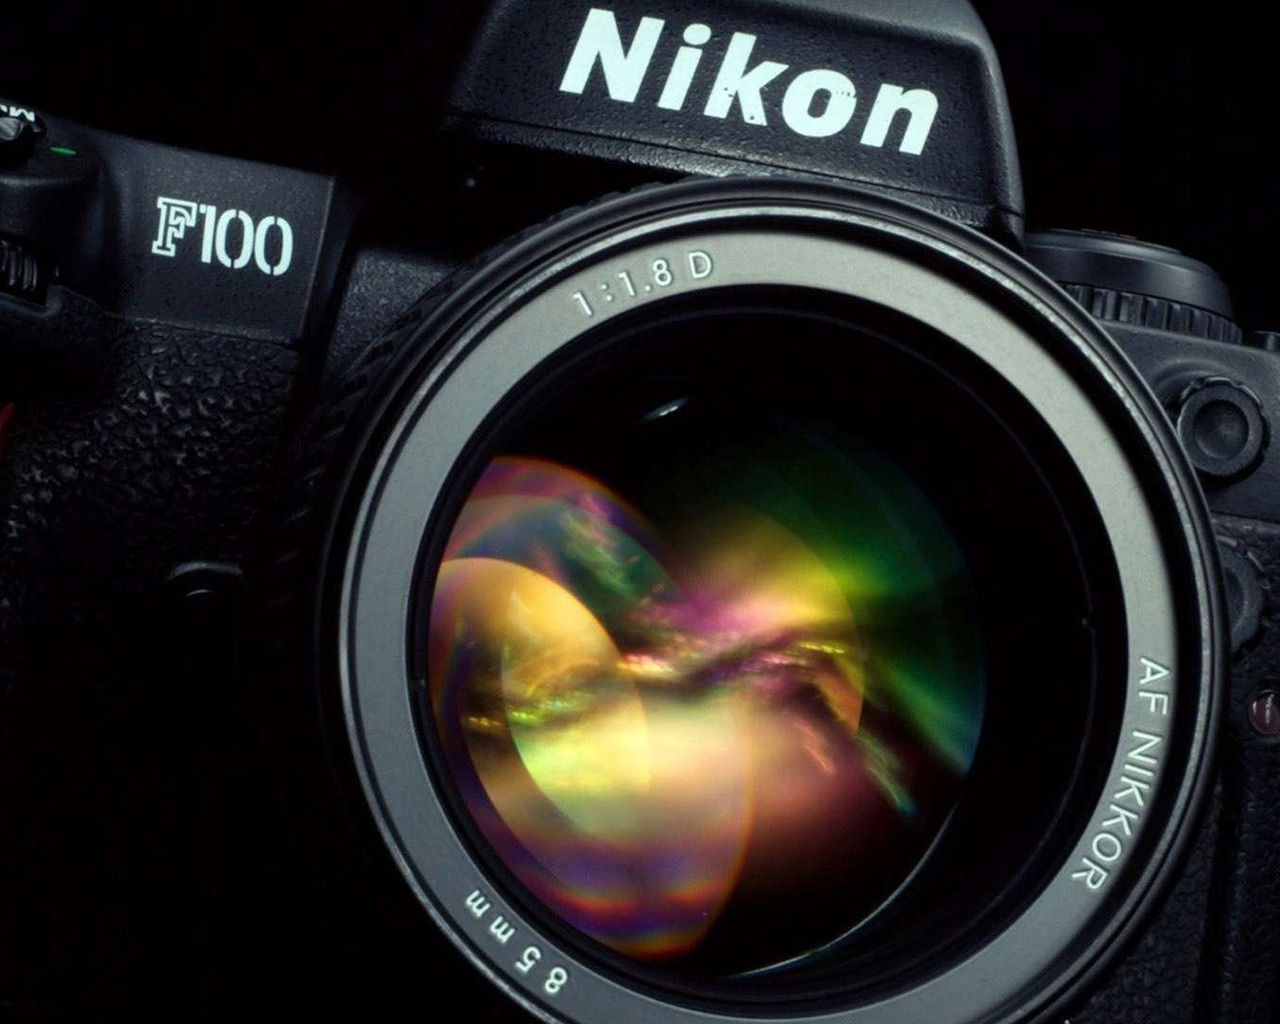 Nikon F100 for 1280 x 1024 resolution